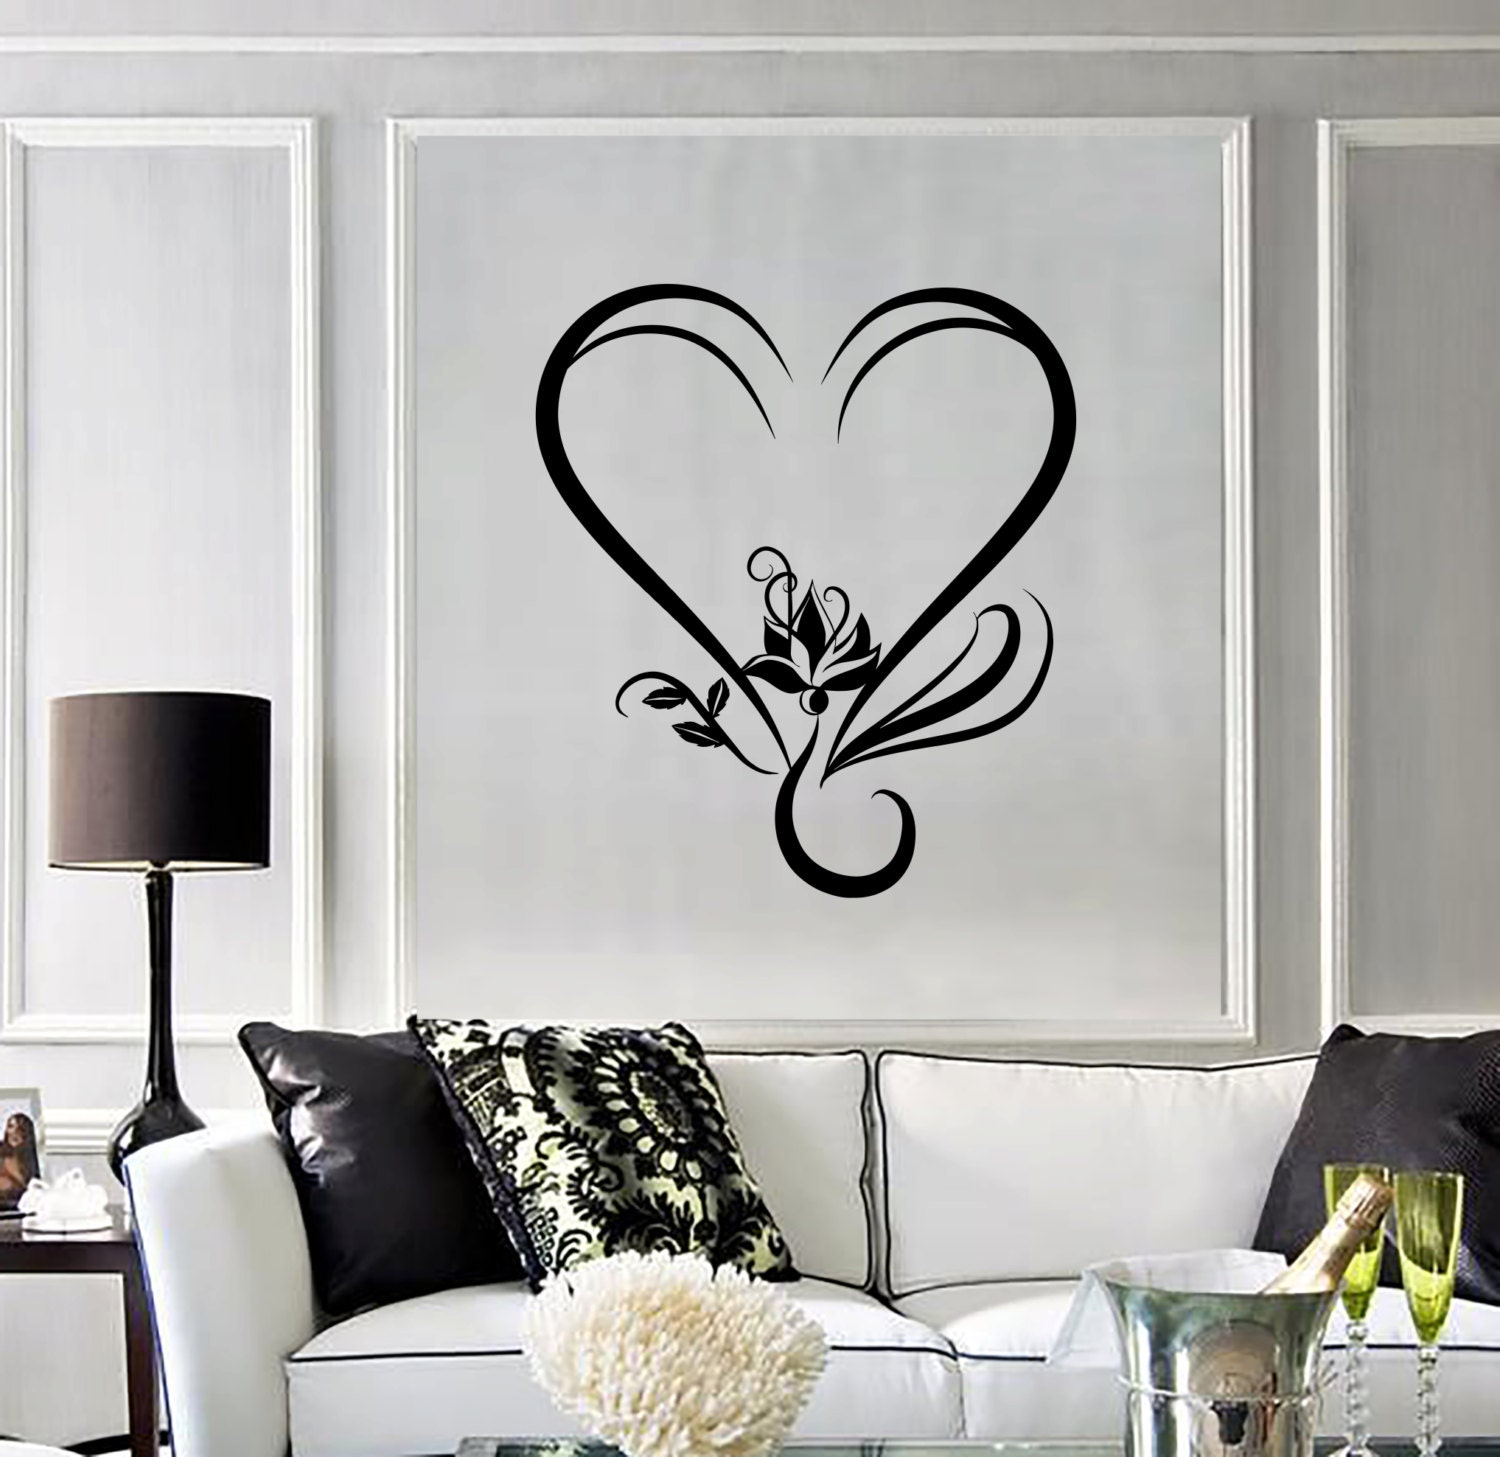 Vinyl Wall Decal Love Heart Arrows Romantic Room Decoration (ig4371)